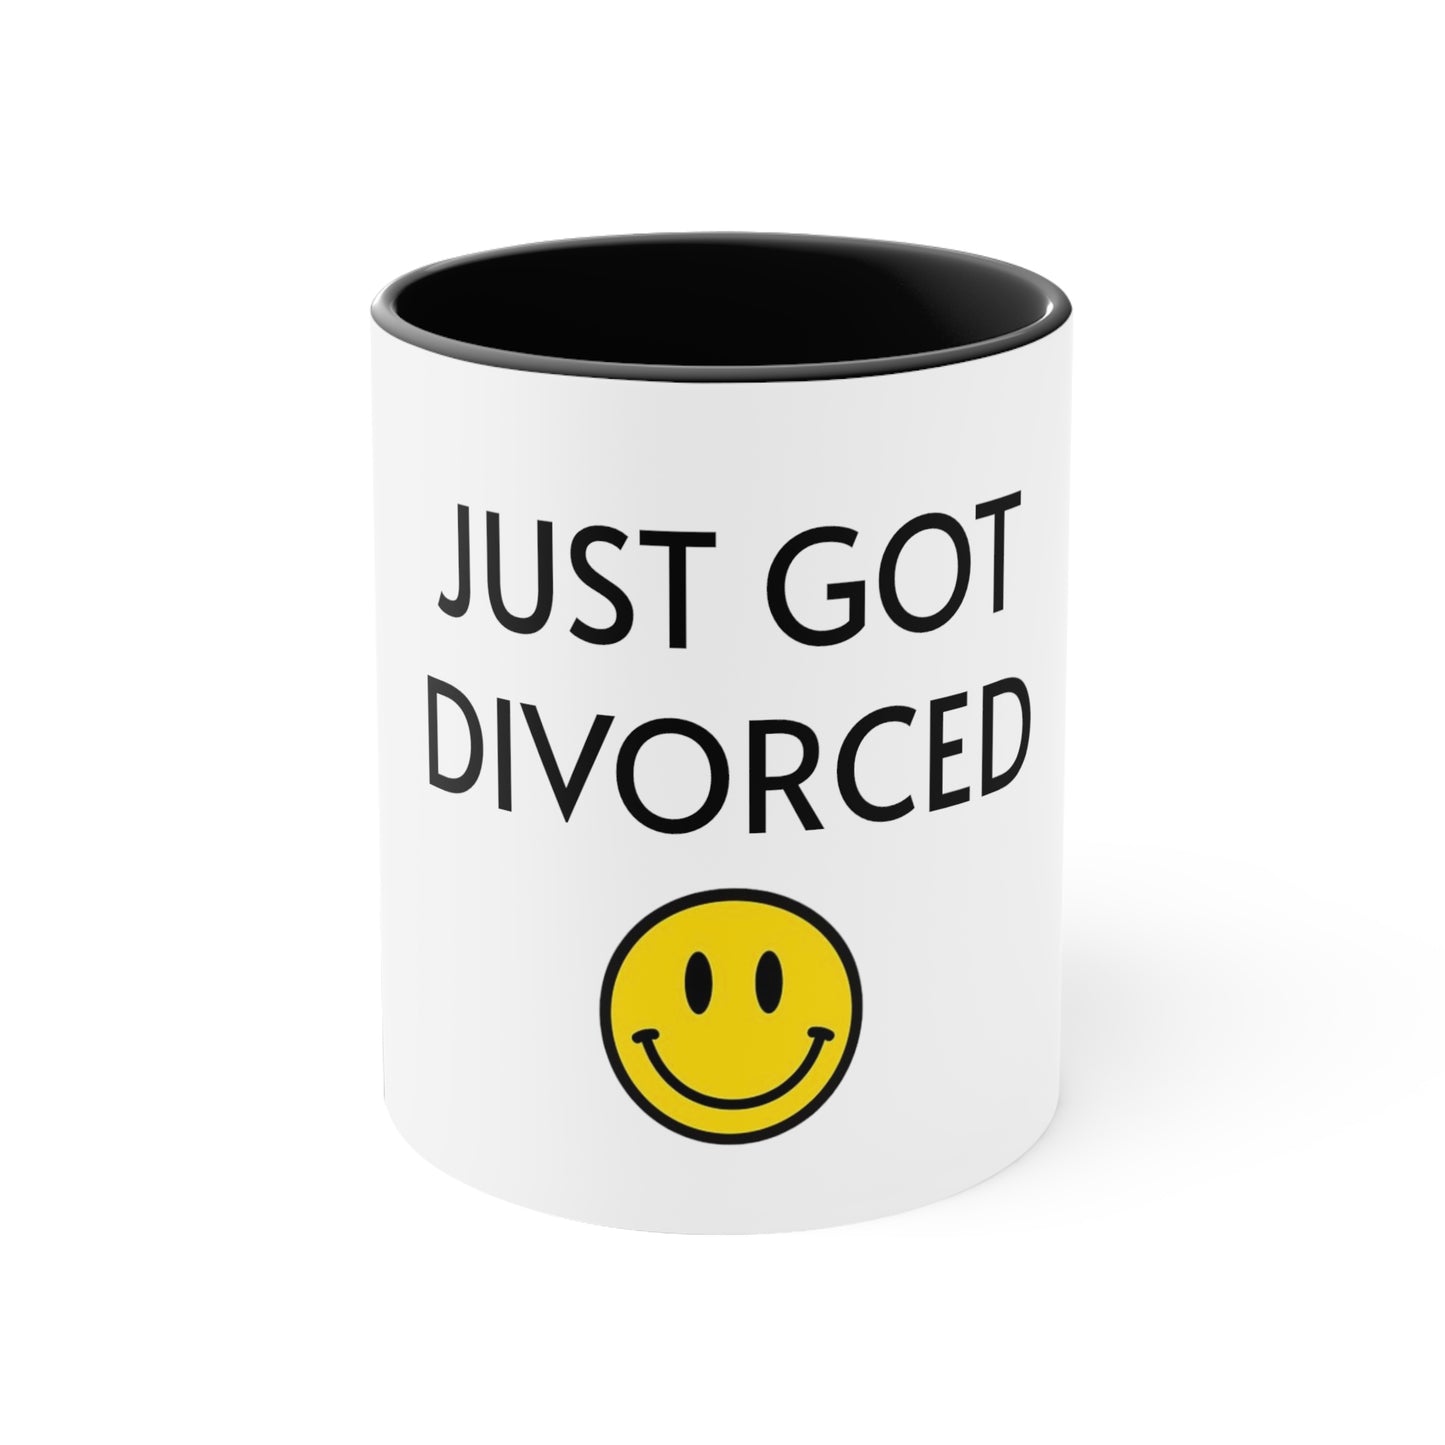 Just got divorced mug